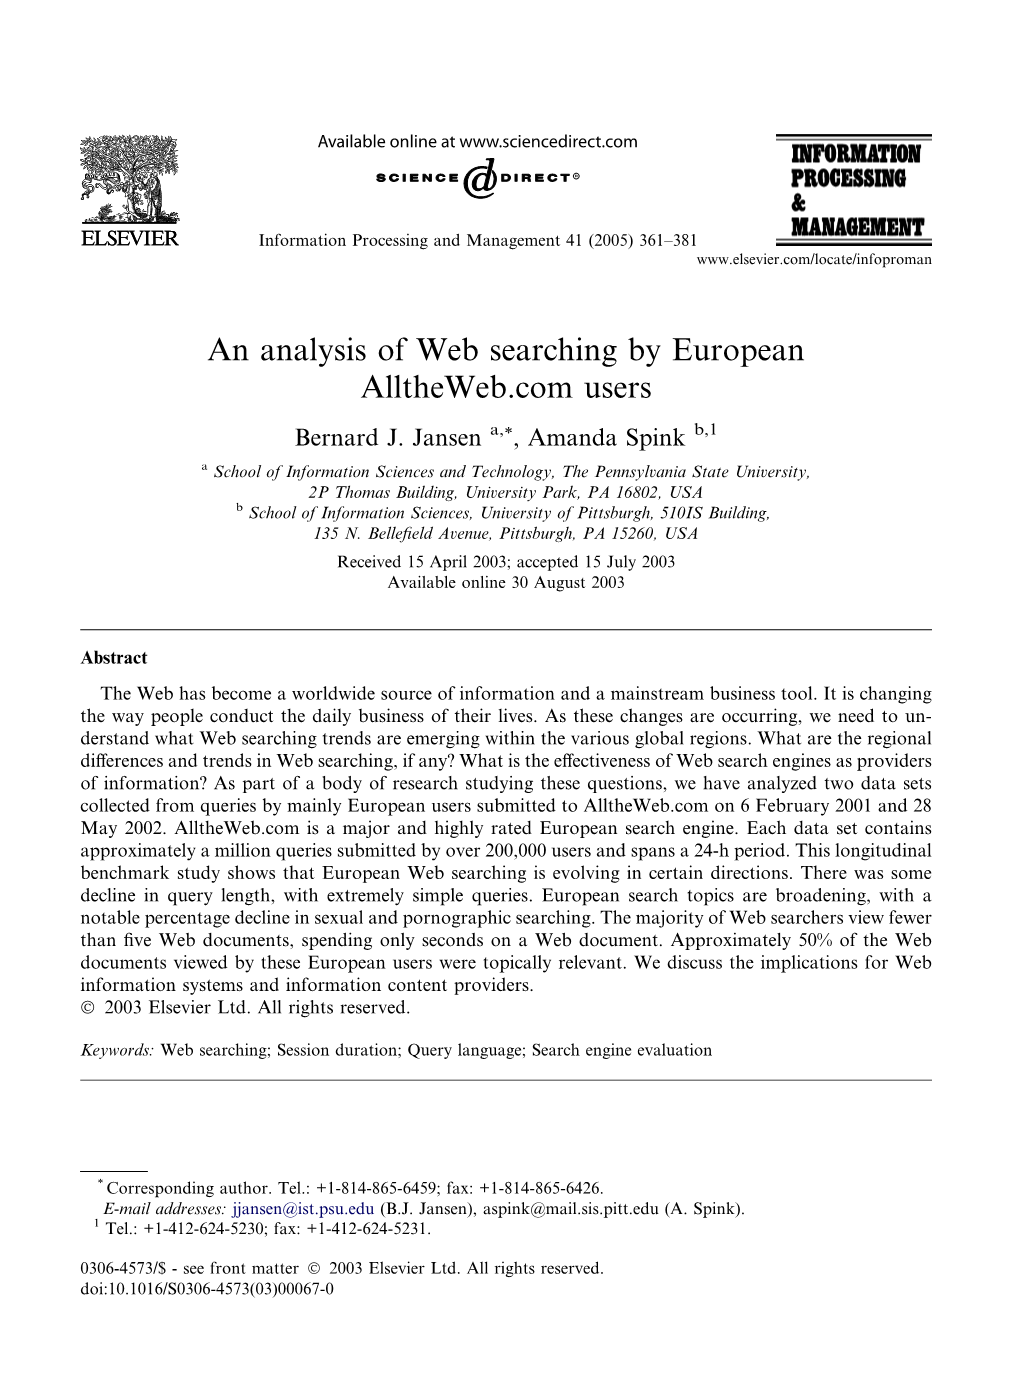 An Analysis of Web Searching by European Alltheweb.Com Users Bernard J